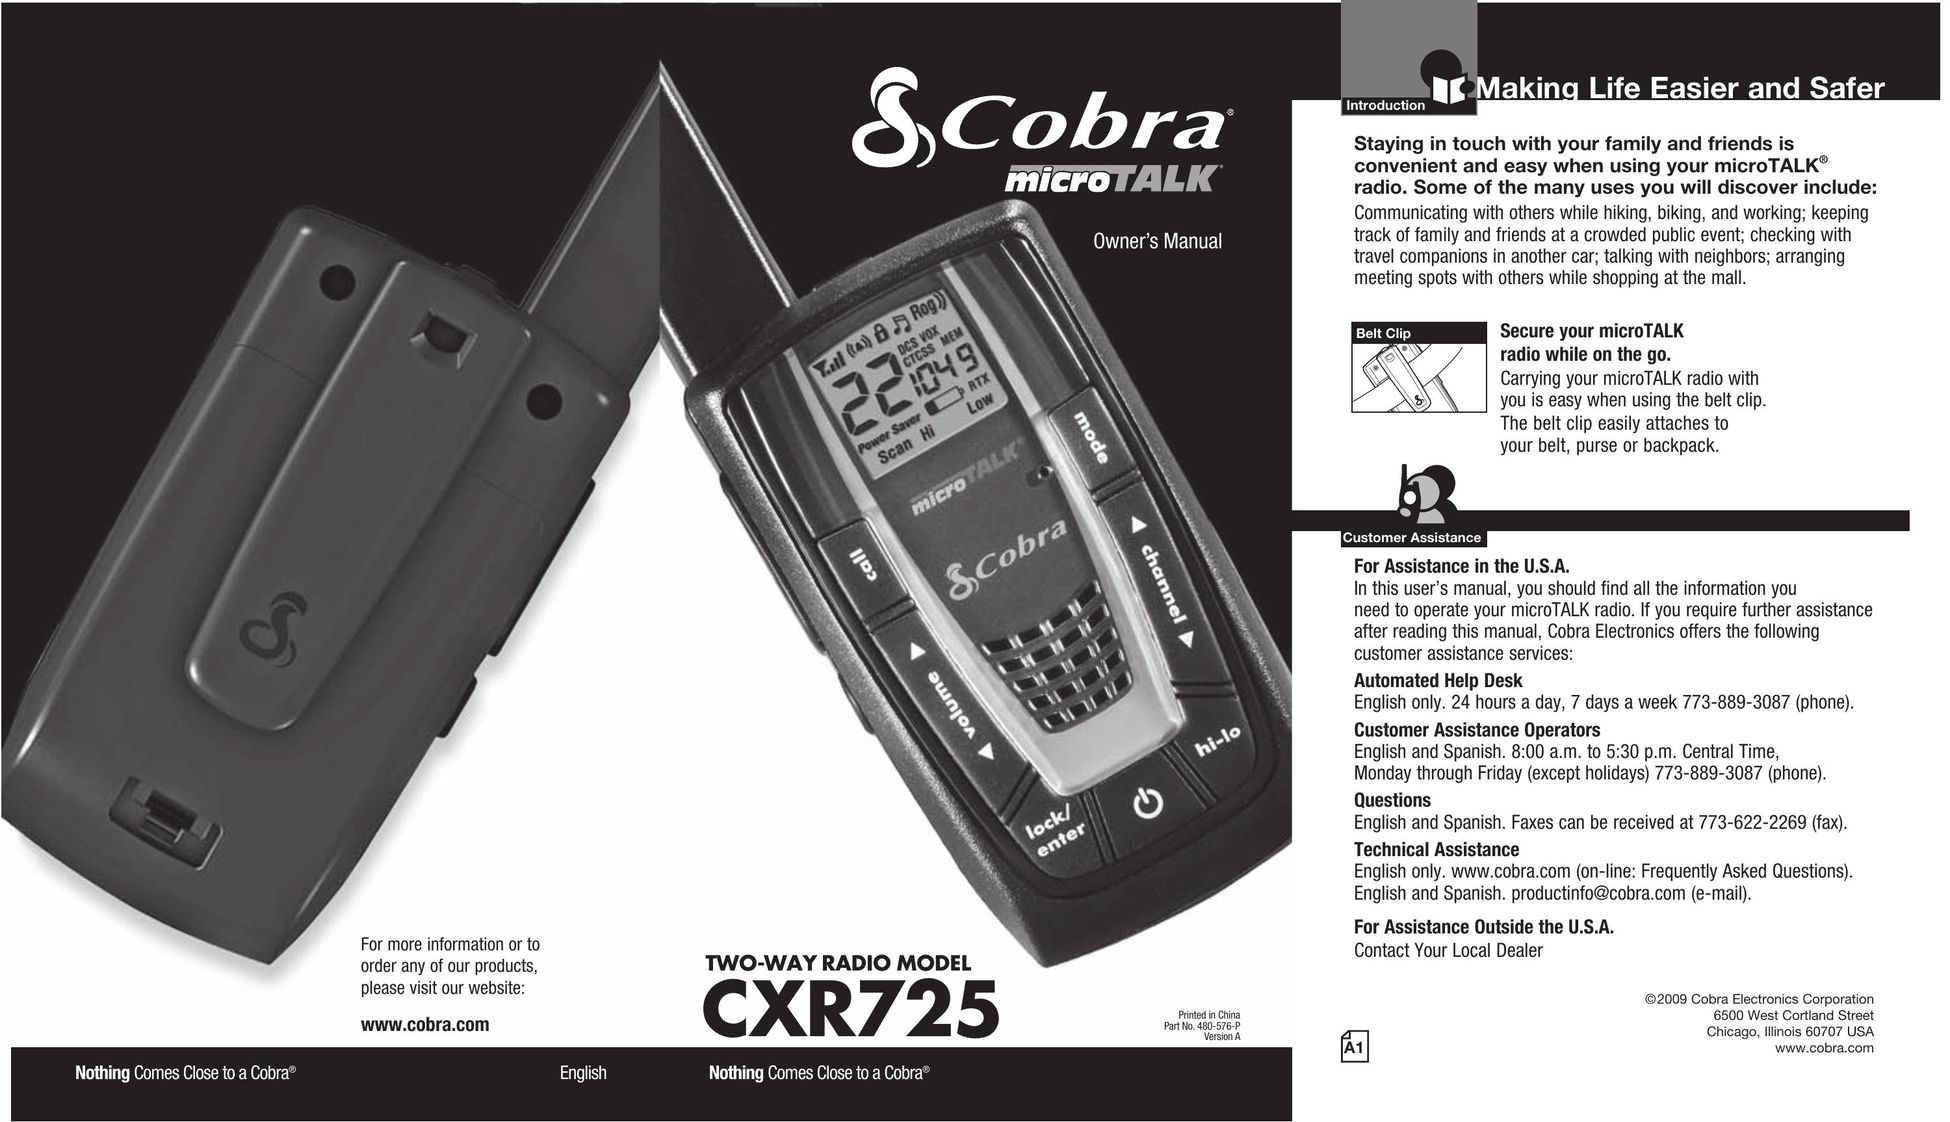 Cobra Electronics CXR725 Two-Way Radio User Manual